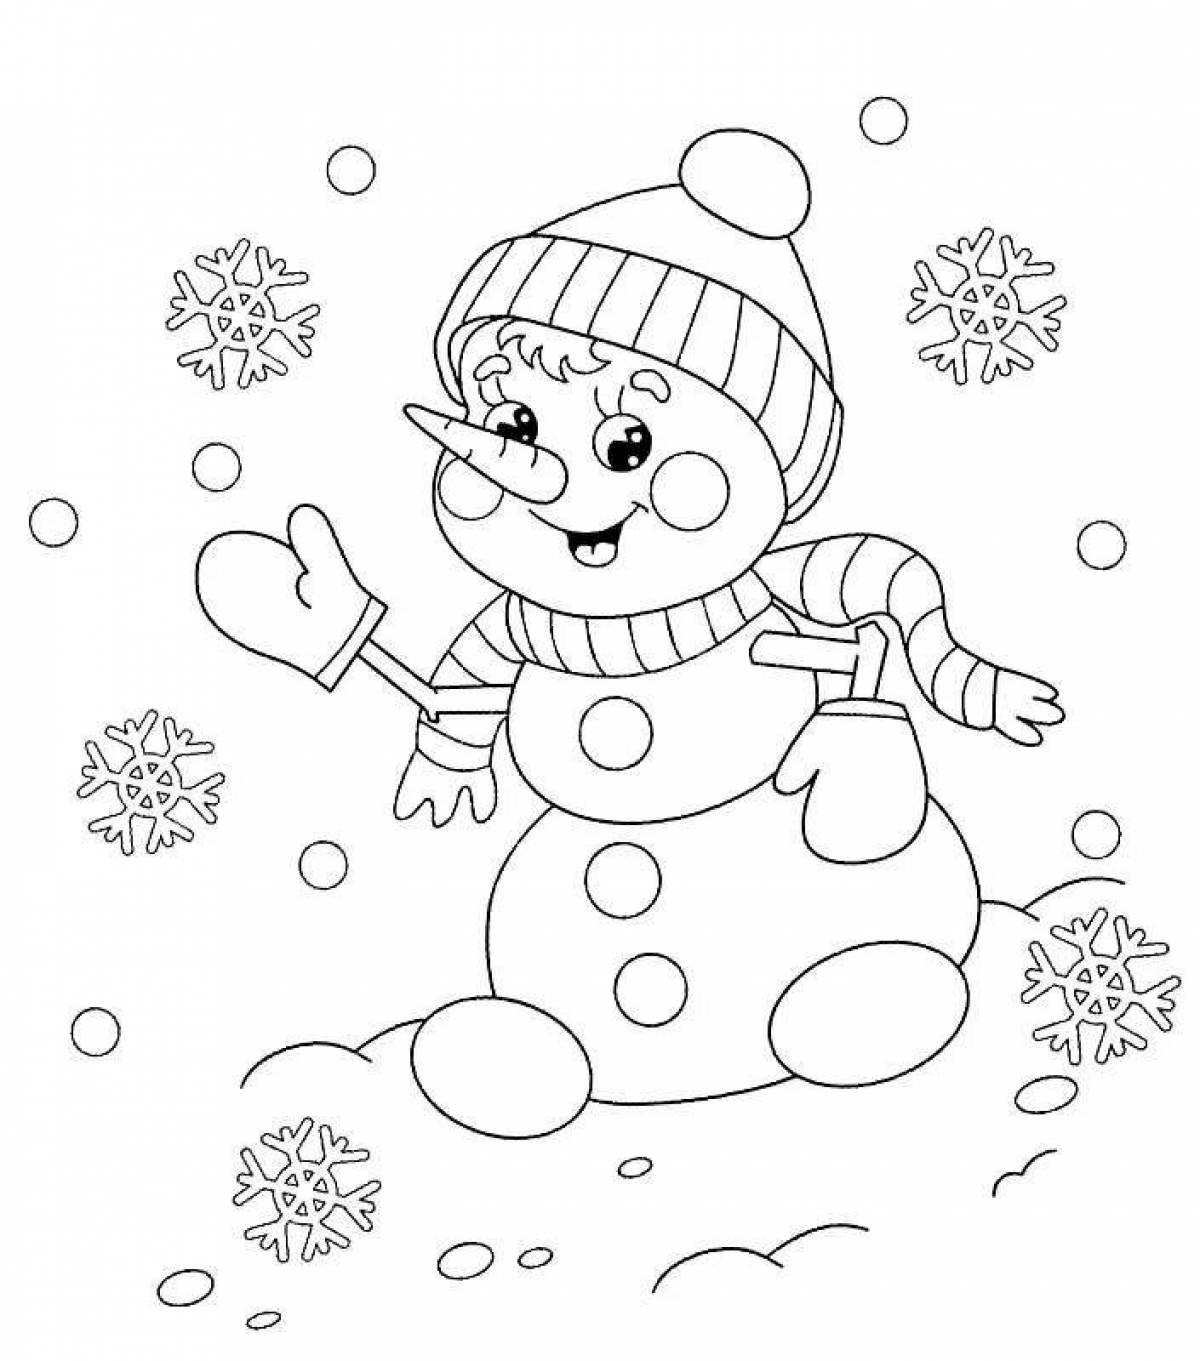 Incredible snowman coloring book